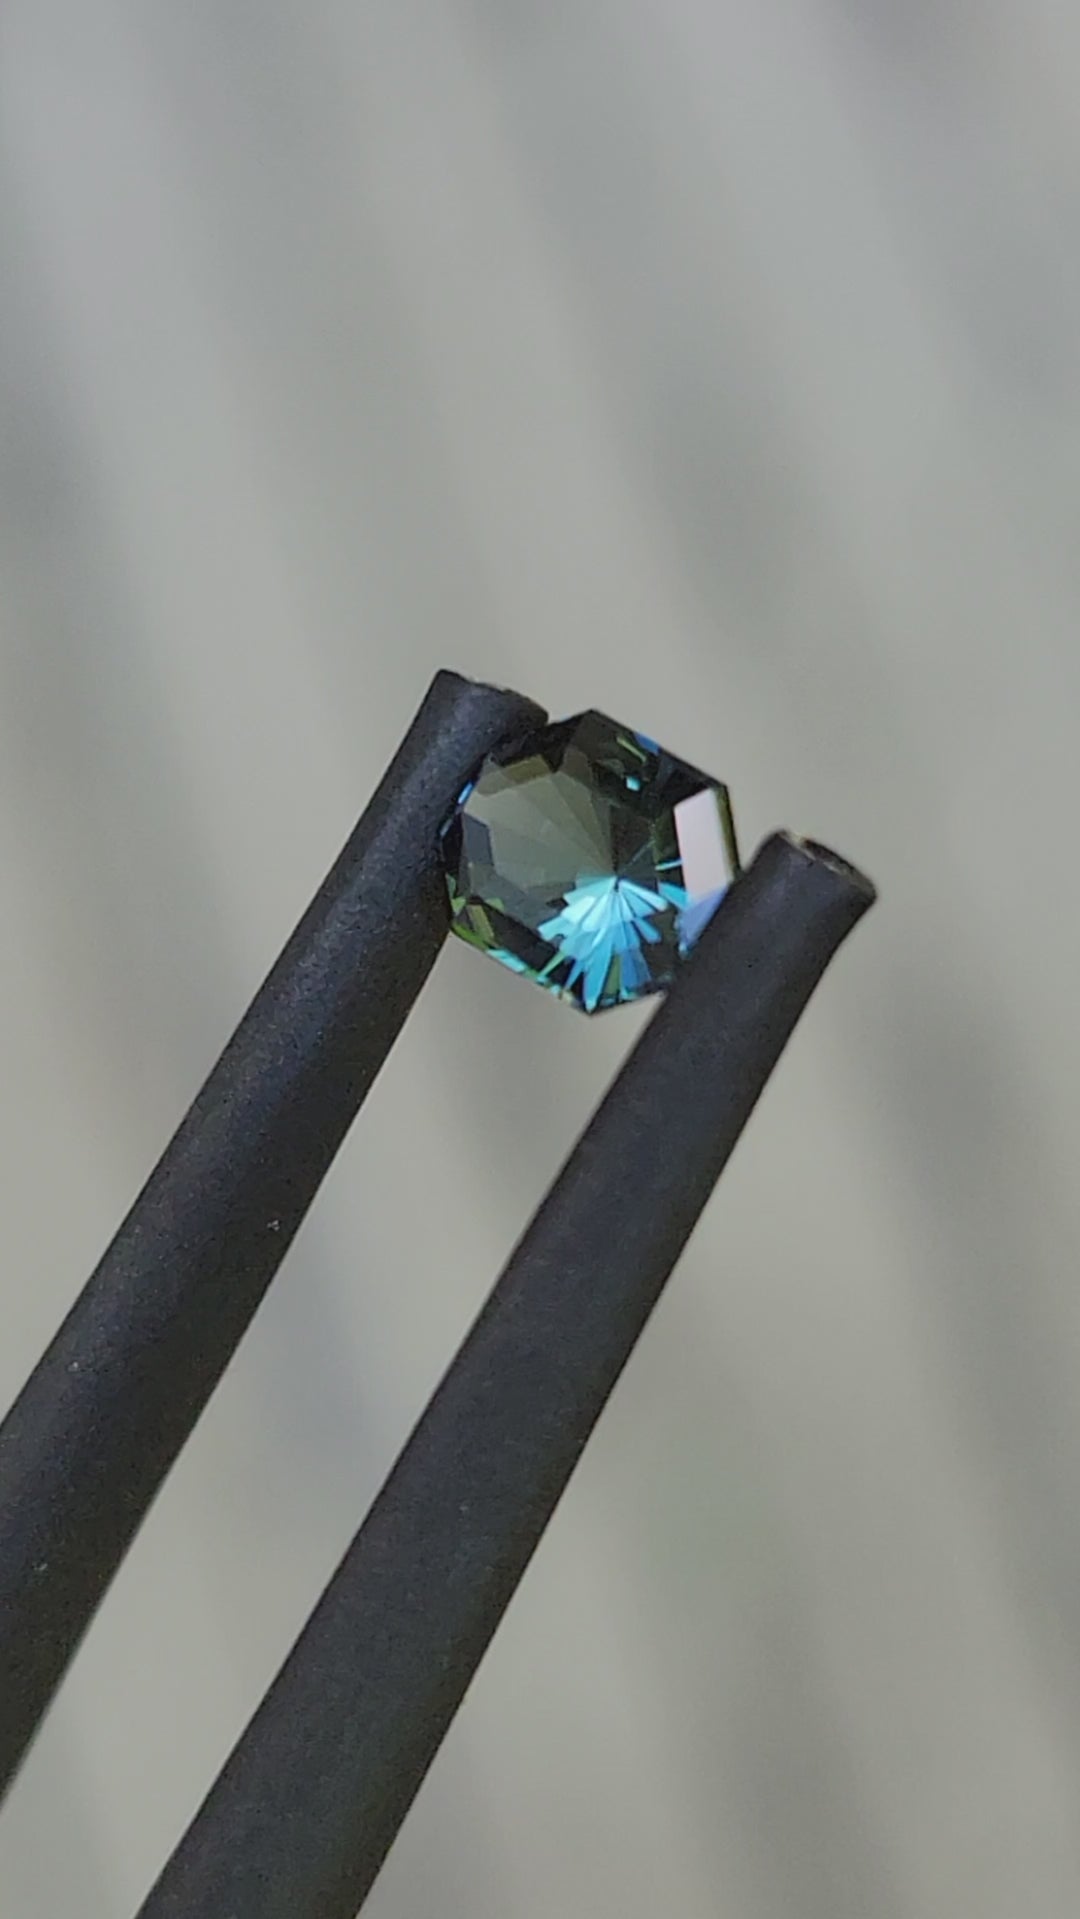 0,51 carat Turquoise/Bleu Saphir Long Octogone - Taille Fantaisie, 4,9x4 mm